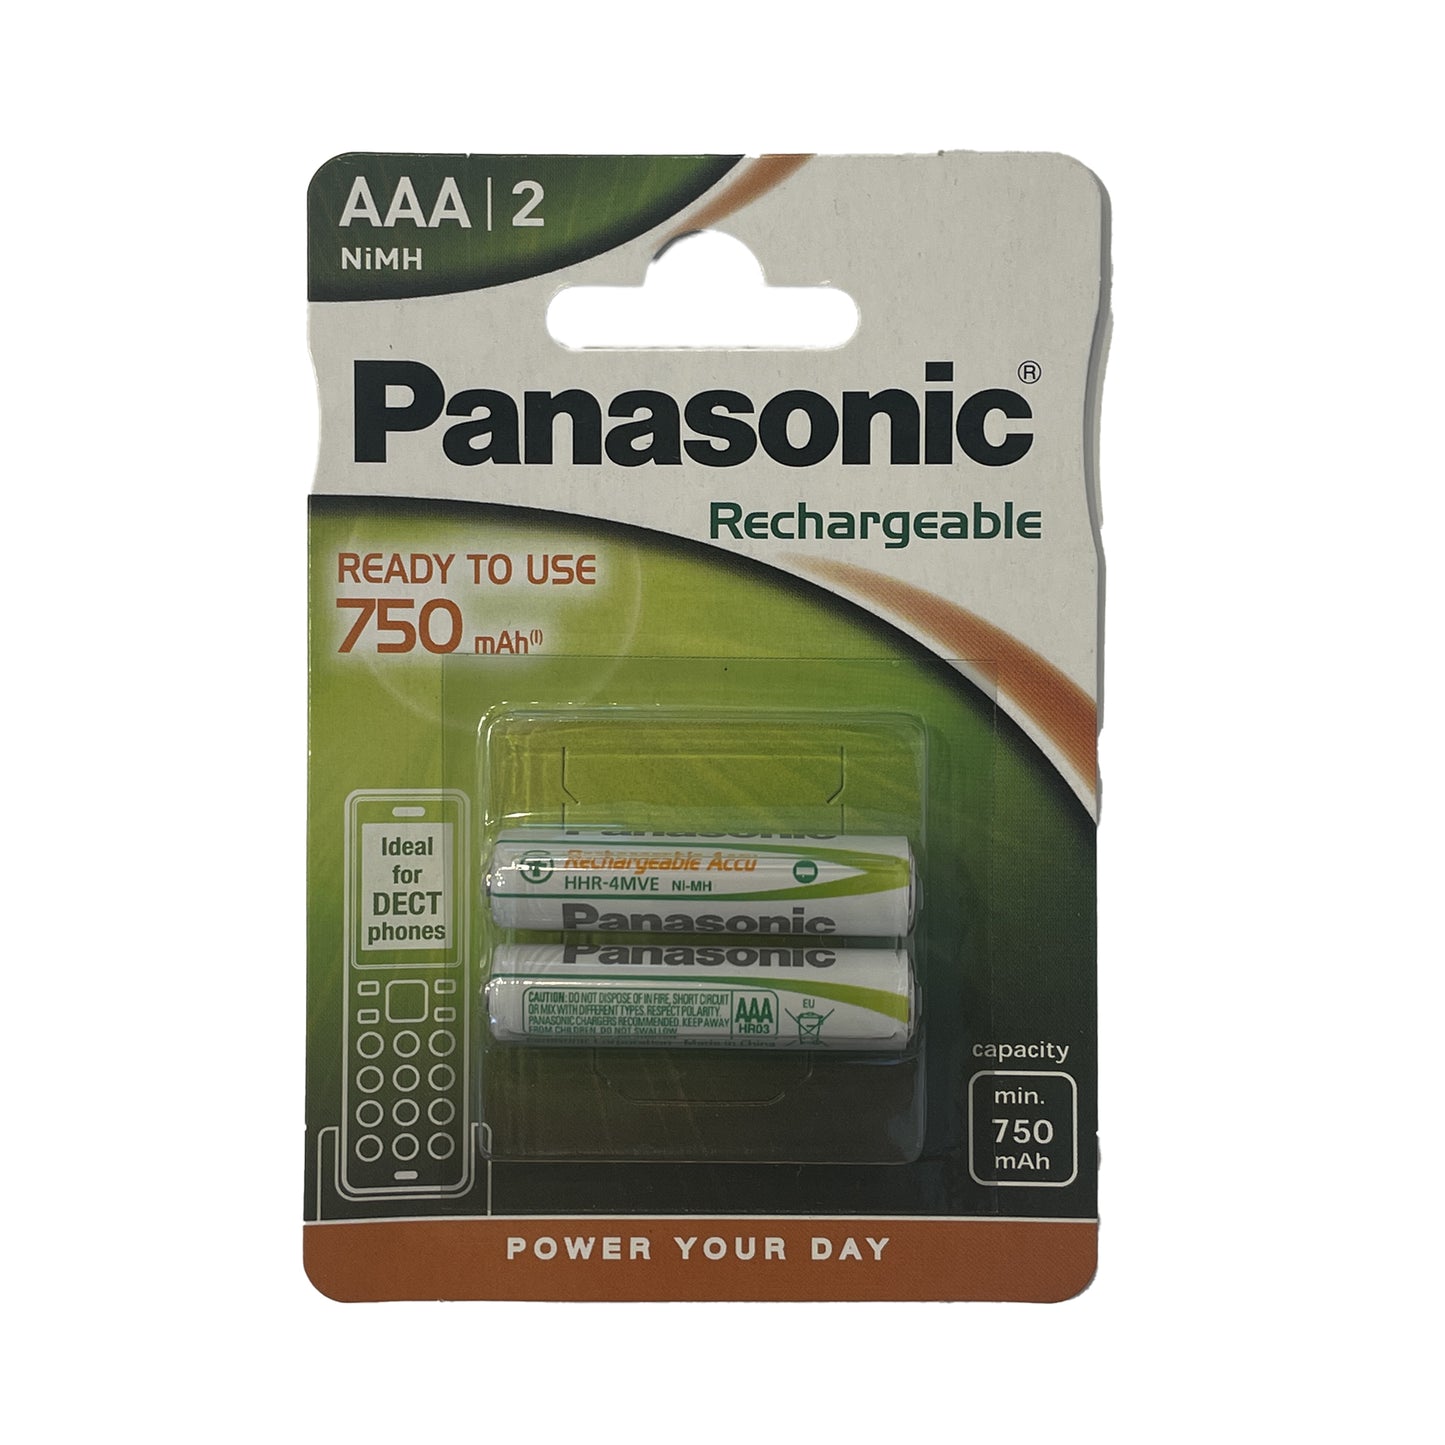 PAN-AAA-REC-750-2 - аккумуляторные батарейки Panasonic AAA, аналоги: R03, LR03, MN2400, 750 мАч (2 шт. в блистере)